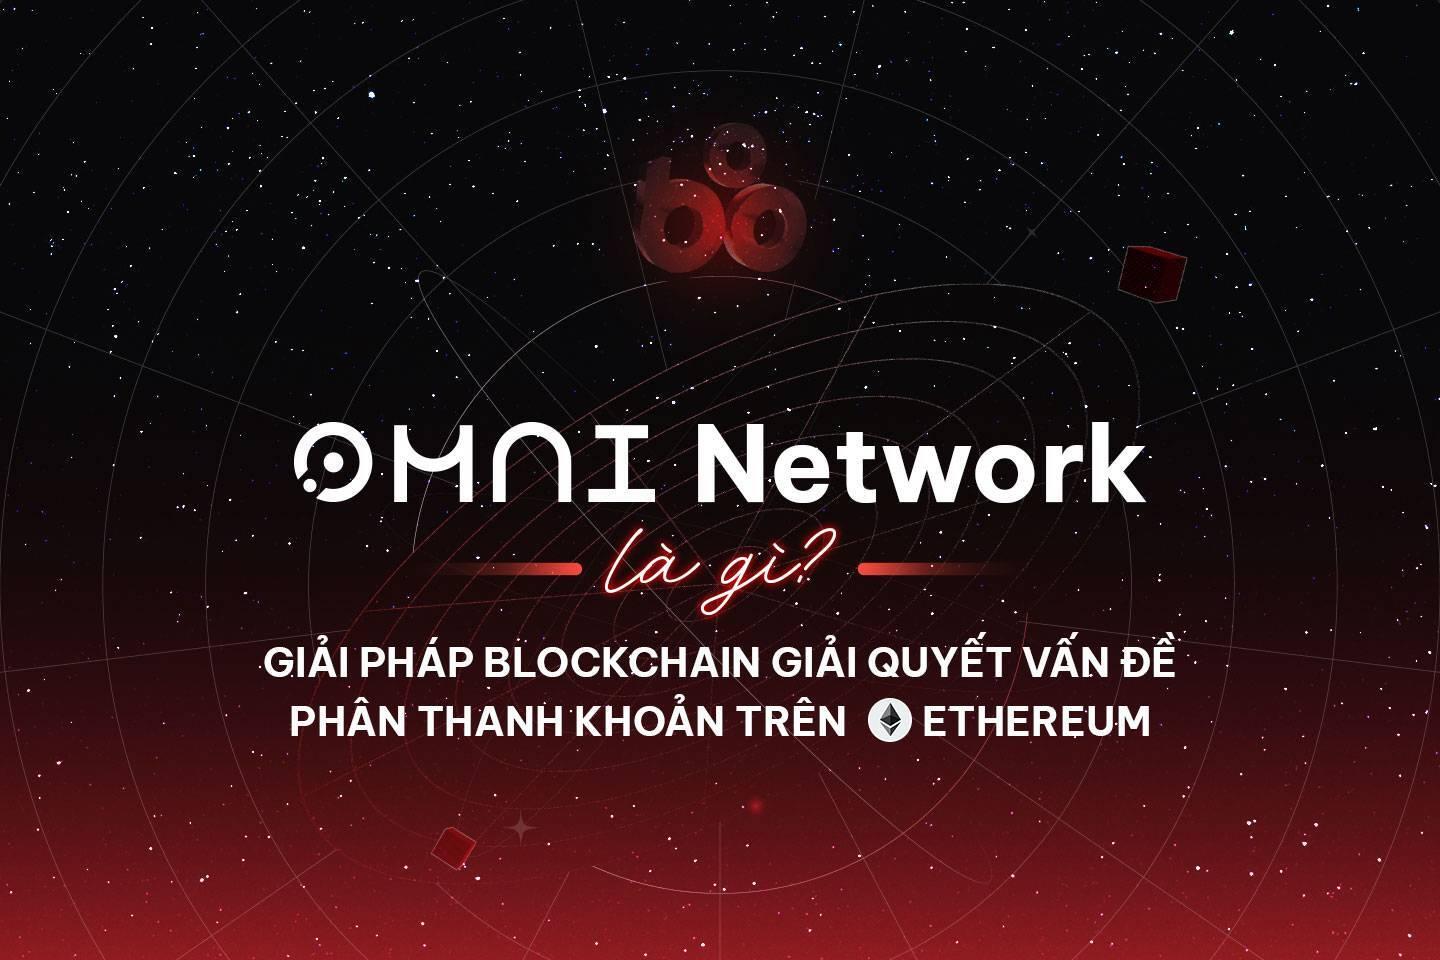 omni-network-la-gi-giai-phap-blockchain-giai-quyet-van-de-phan-manh-thanh-khoan-tren-ethereum